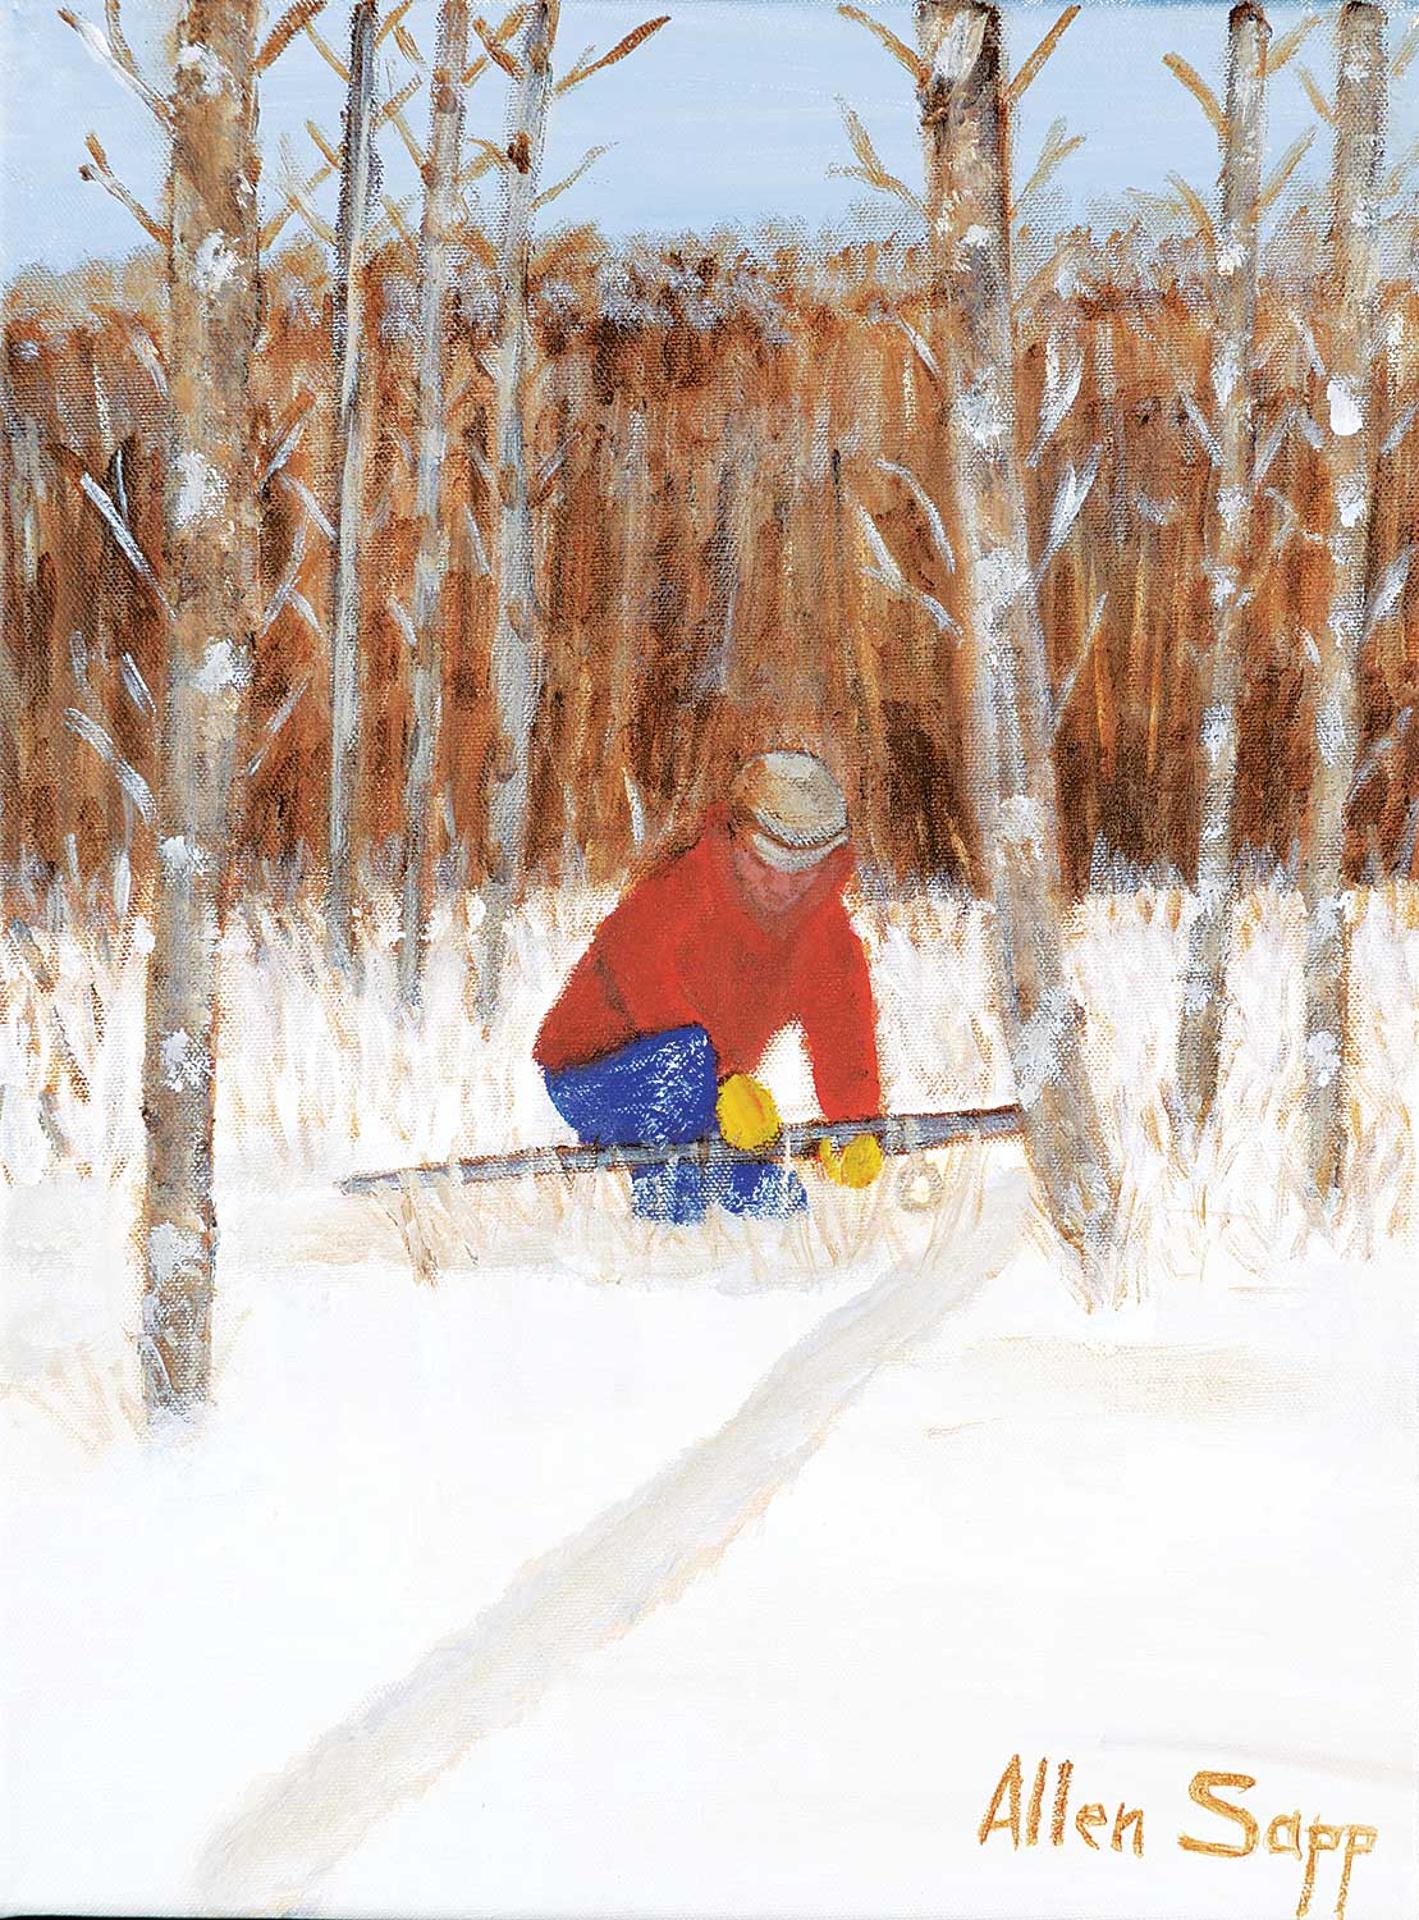 Allen Fredrick Sapp (1929-2015) - Untitled - Getting Ready for Winter